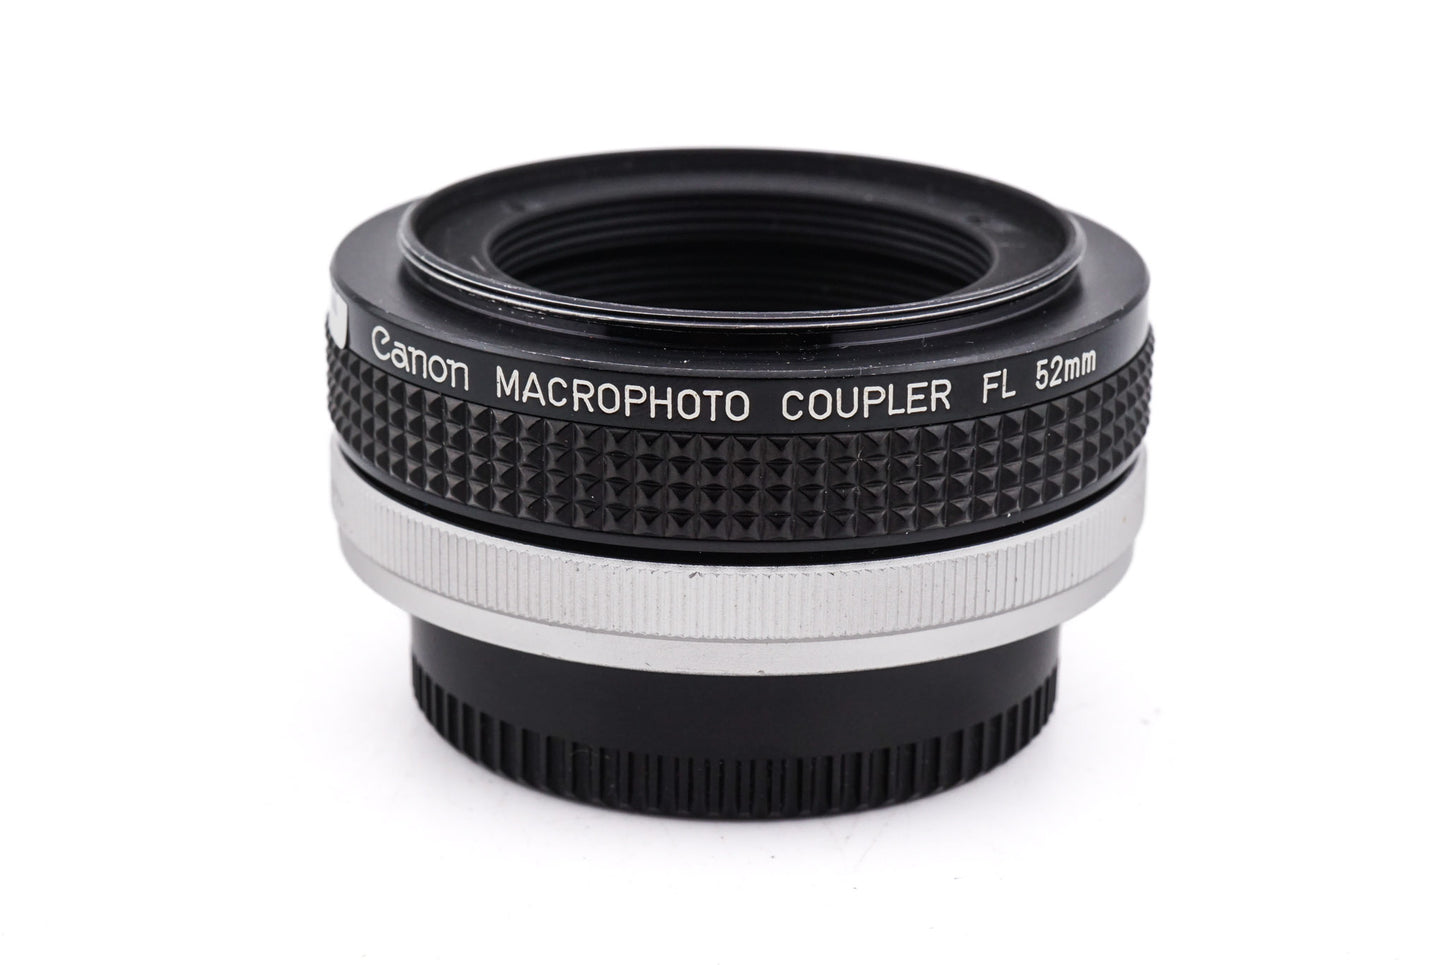 Canon Macrophoto Coupler FL 52mm - Accessory